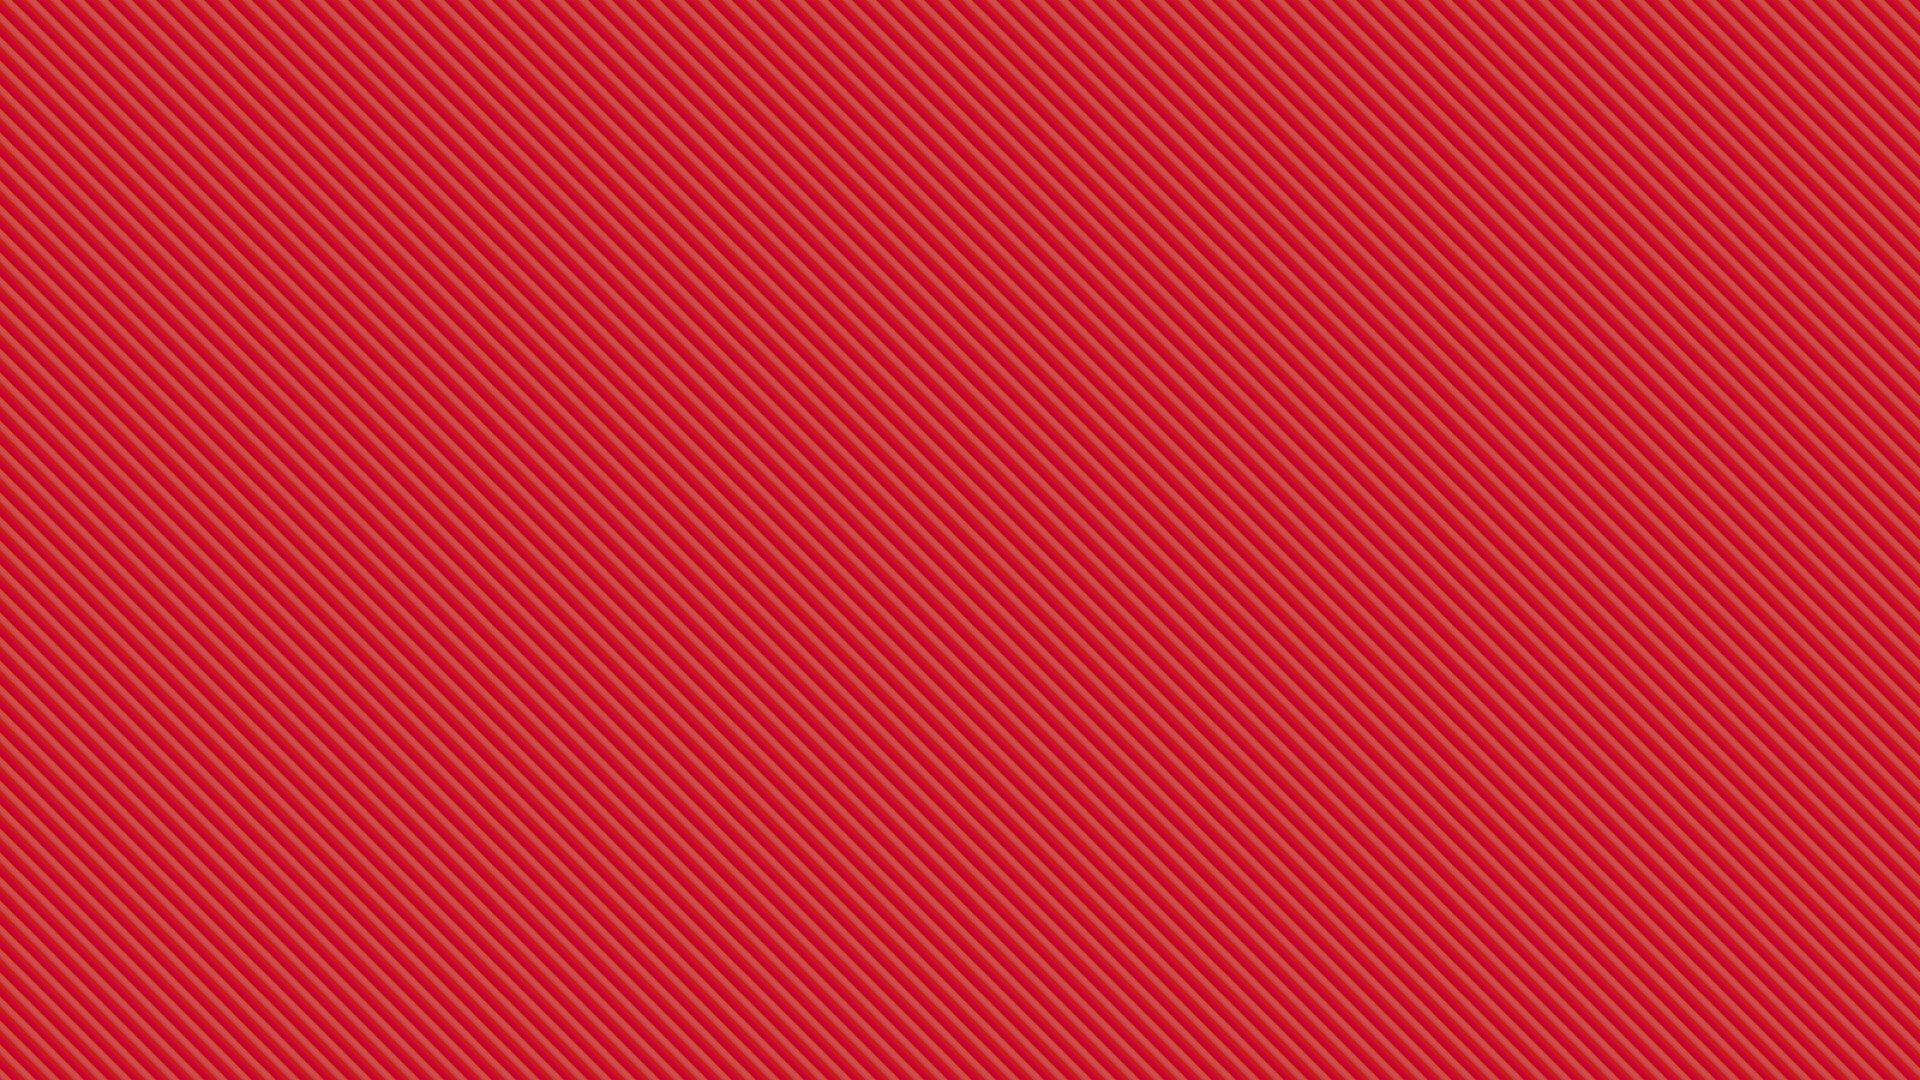 Dark Red Wallpaper HD Wallpapers Pinterest 1920Ã1080